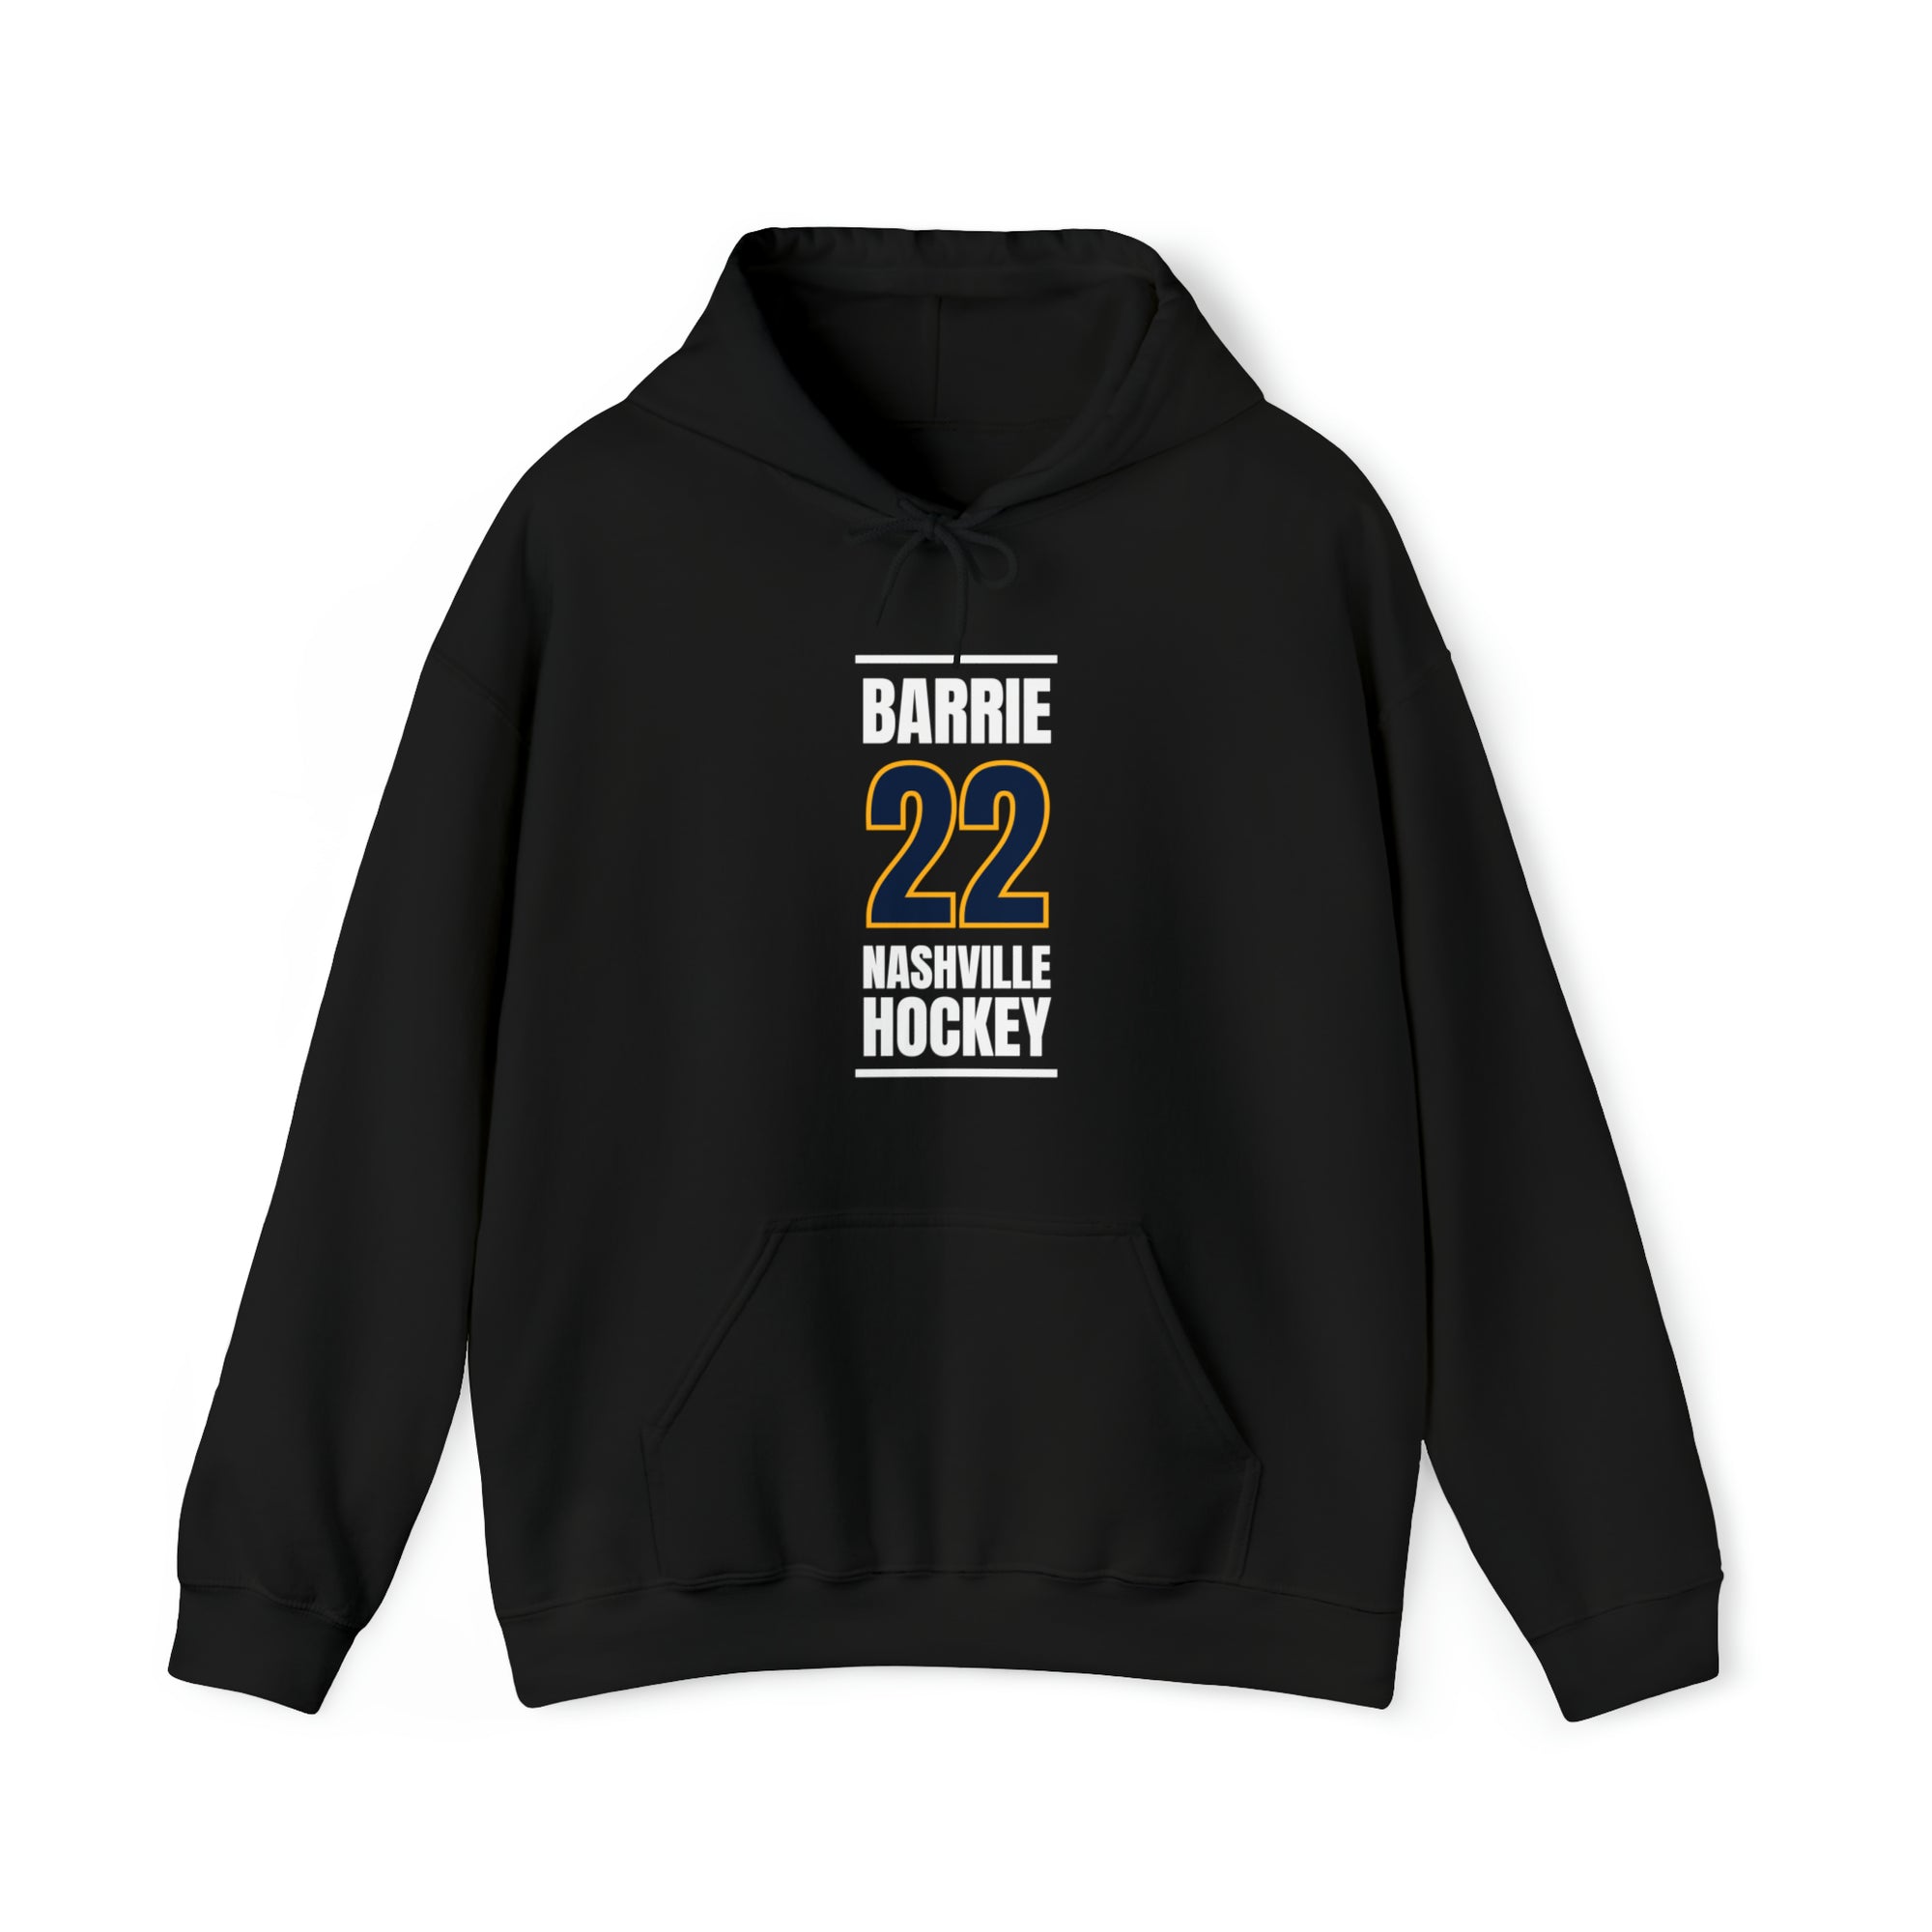 Barrie 22 Nashville Hockey Navy Blue Vertical Design Unisex Hooded Sweatshirt